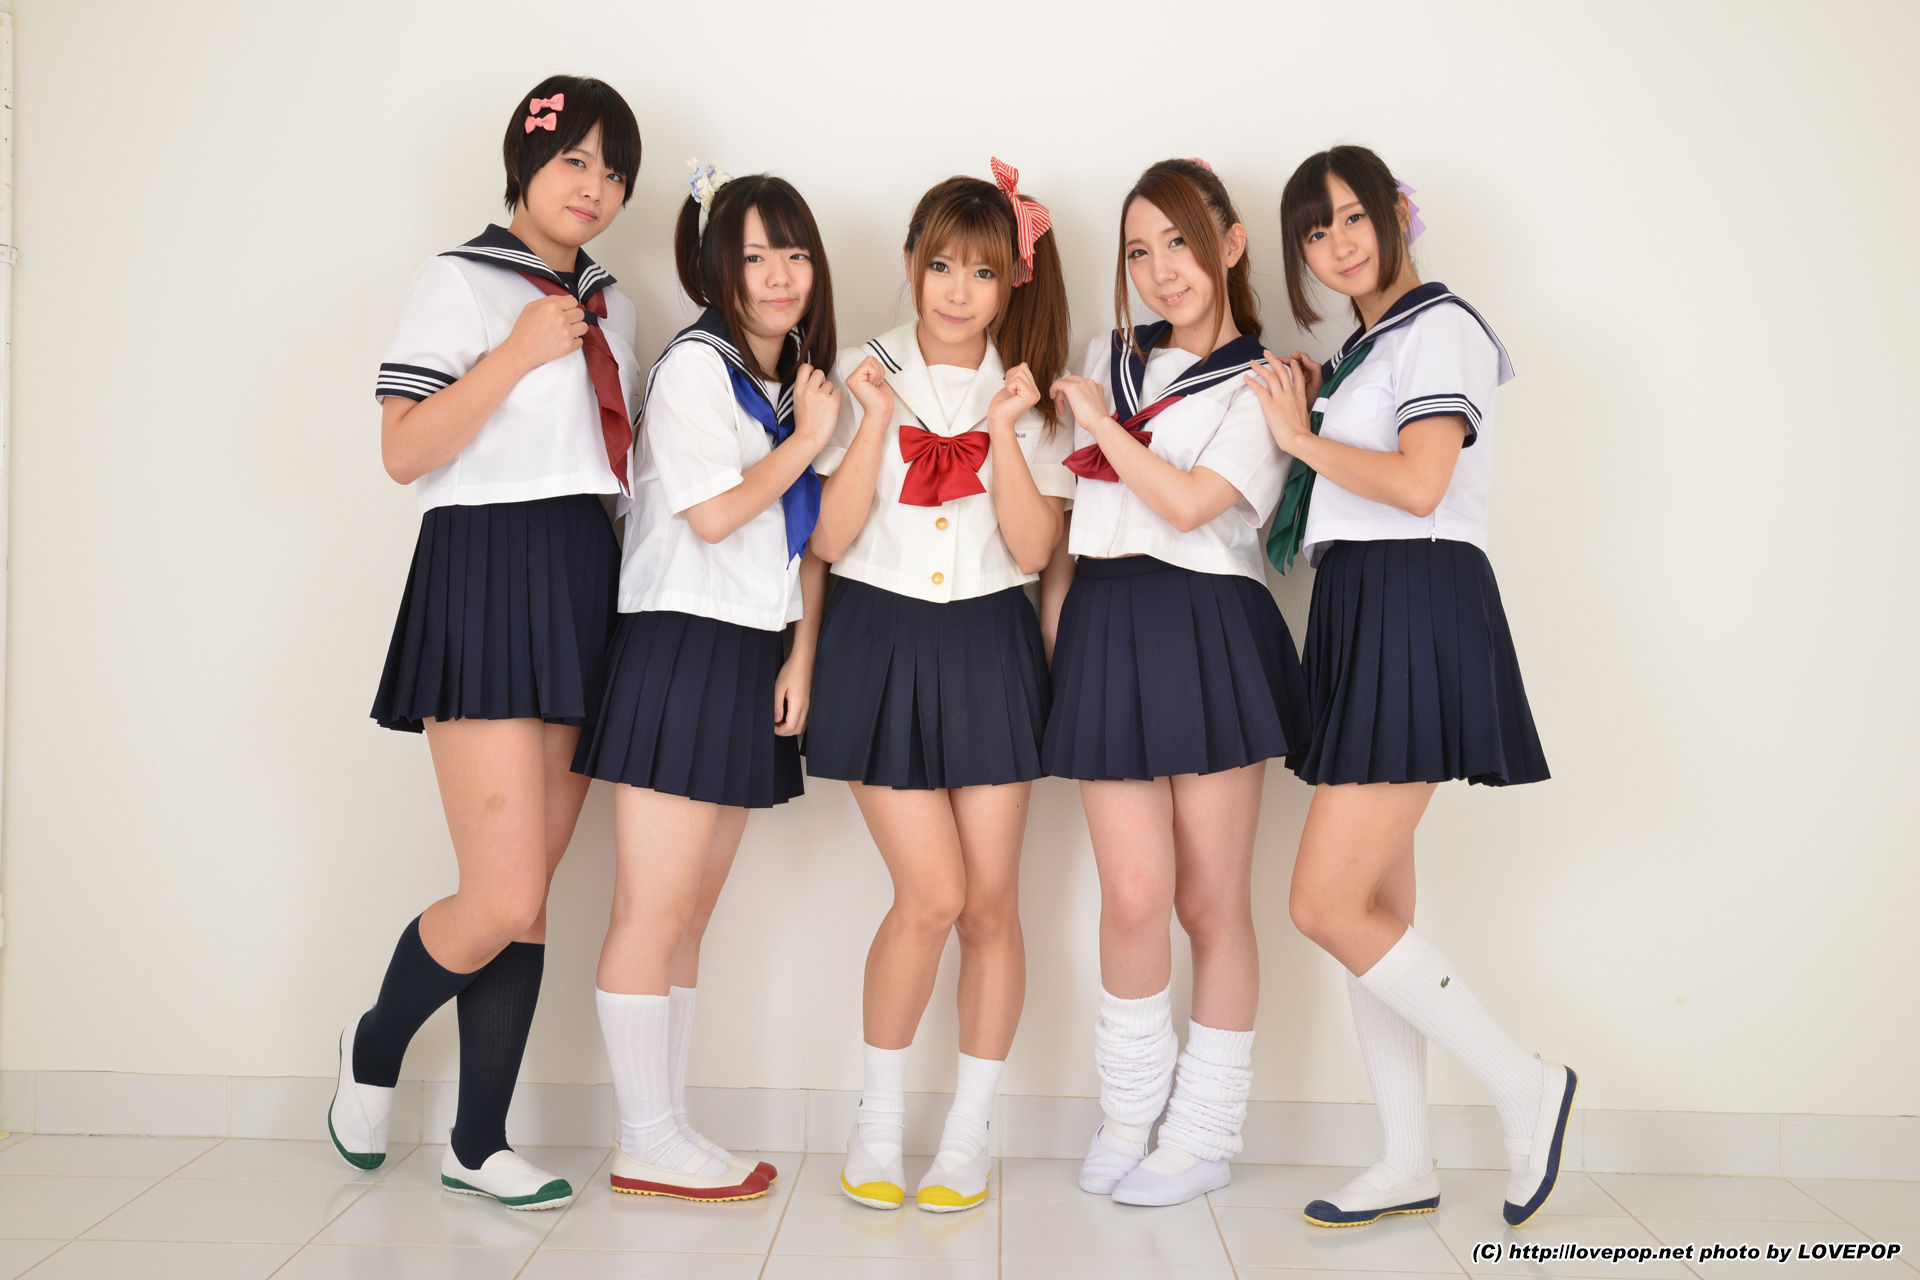  [LOVEPOP] Academy ラブリーポップス Sailor - PPV